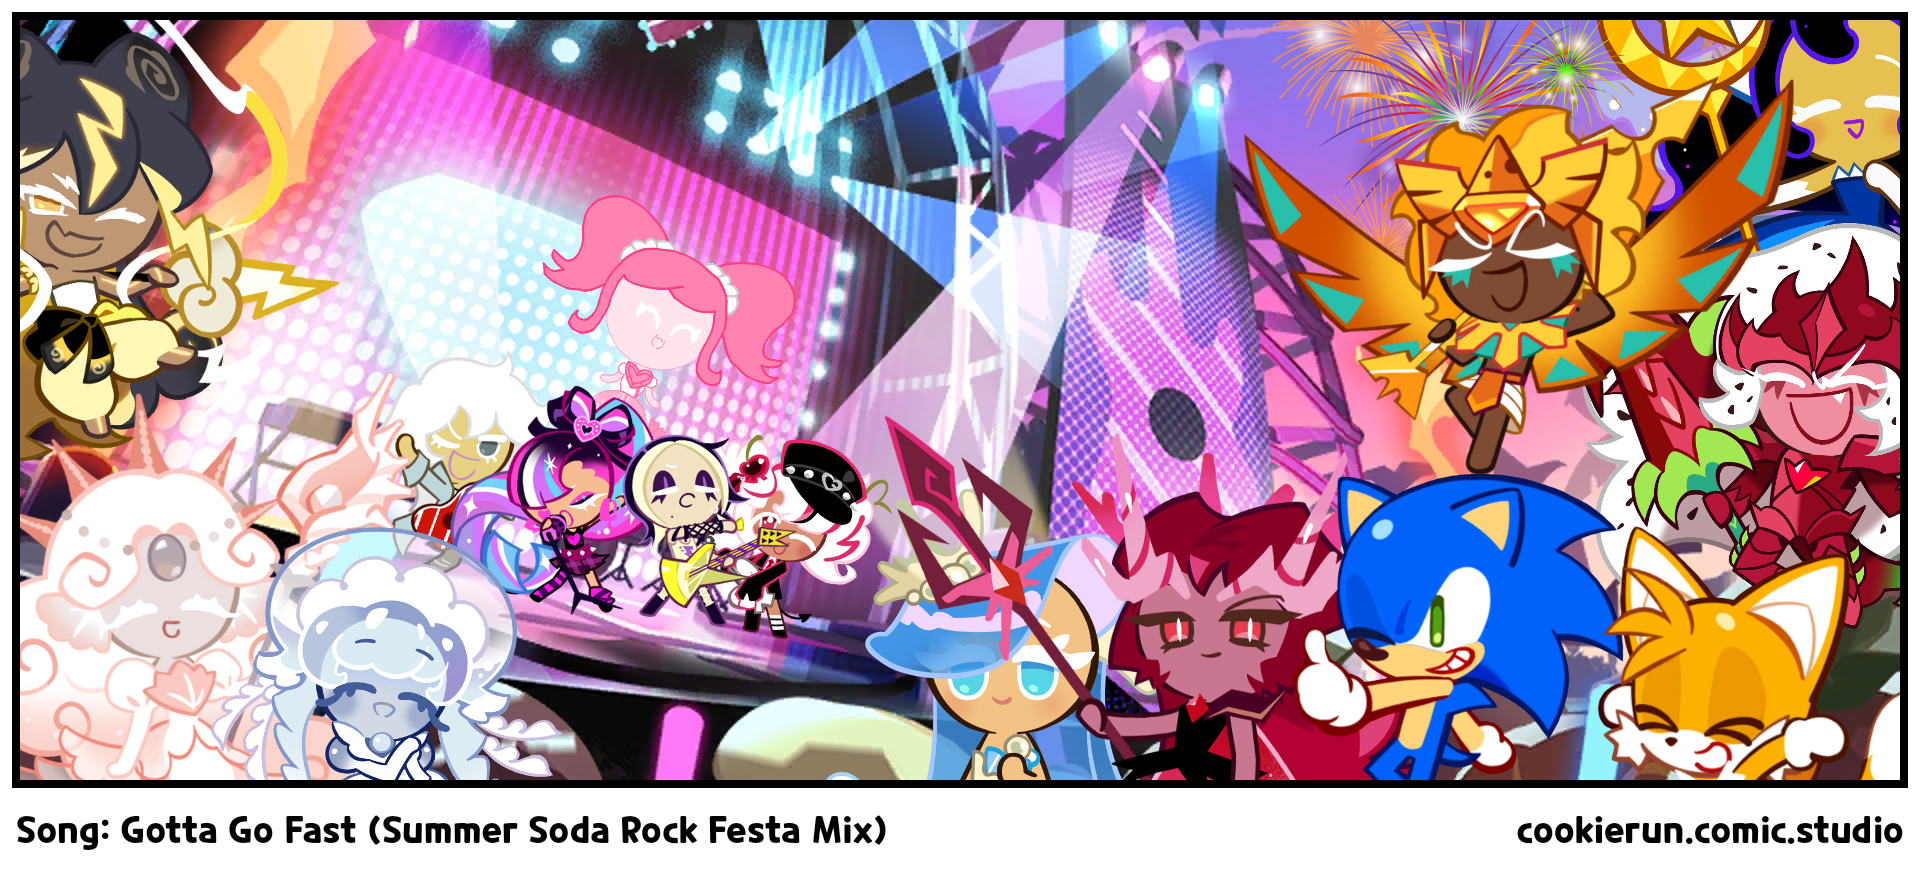 Song: Gotta Go Fast (Summer Soda Rock Festa Mix)